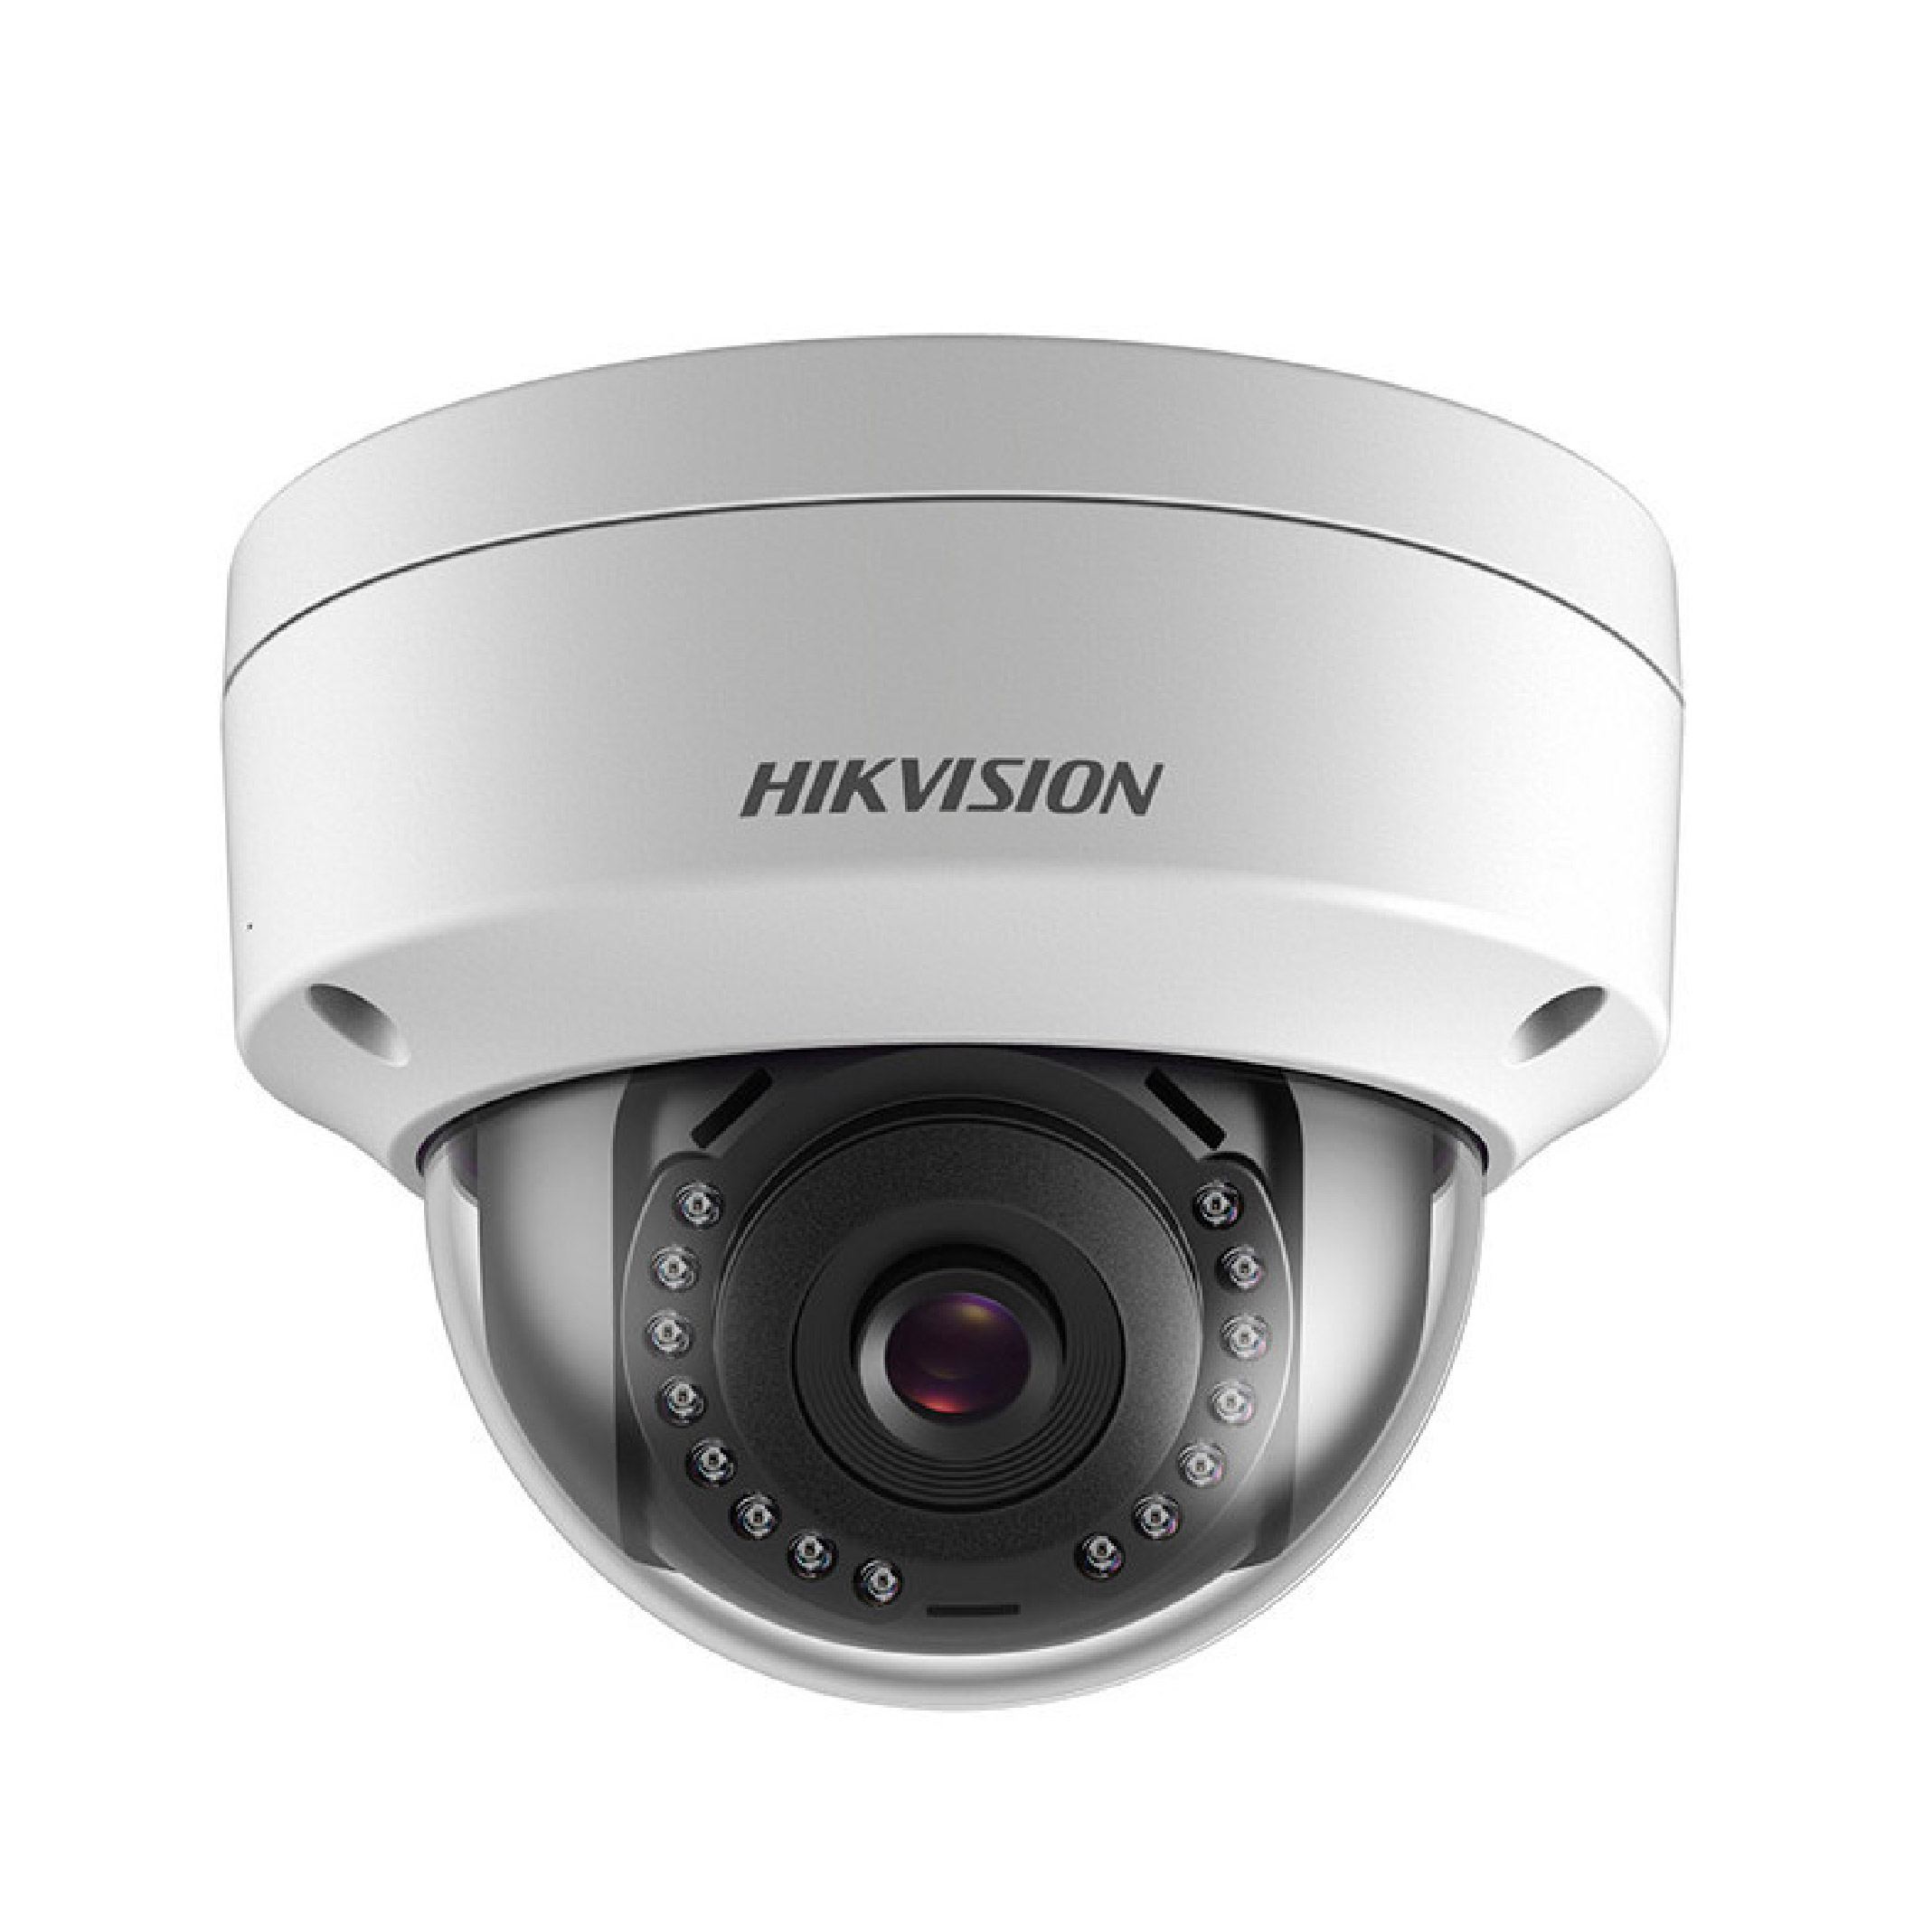 HIKVISION DS-2CD1143G0-I Turbo HD Camera